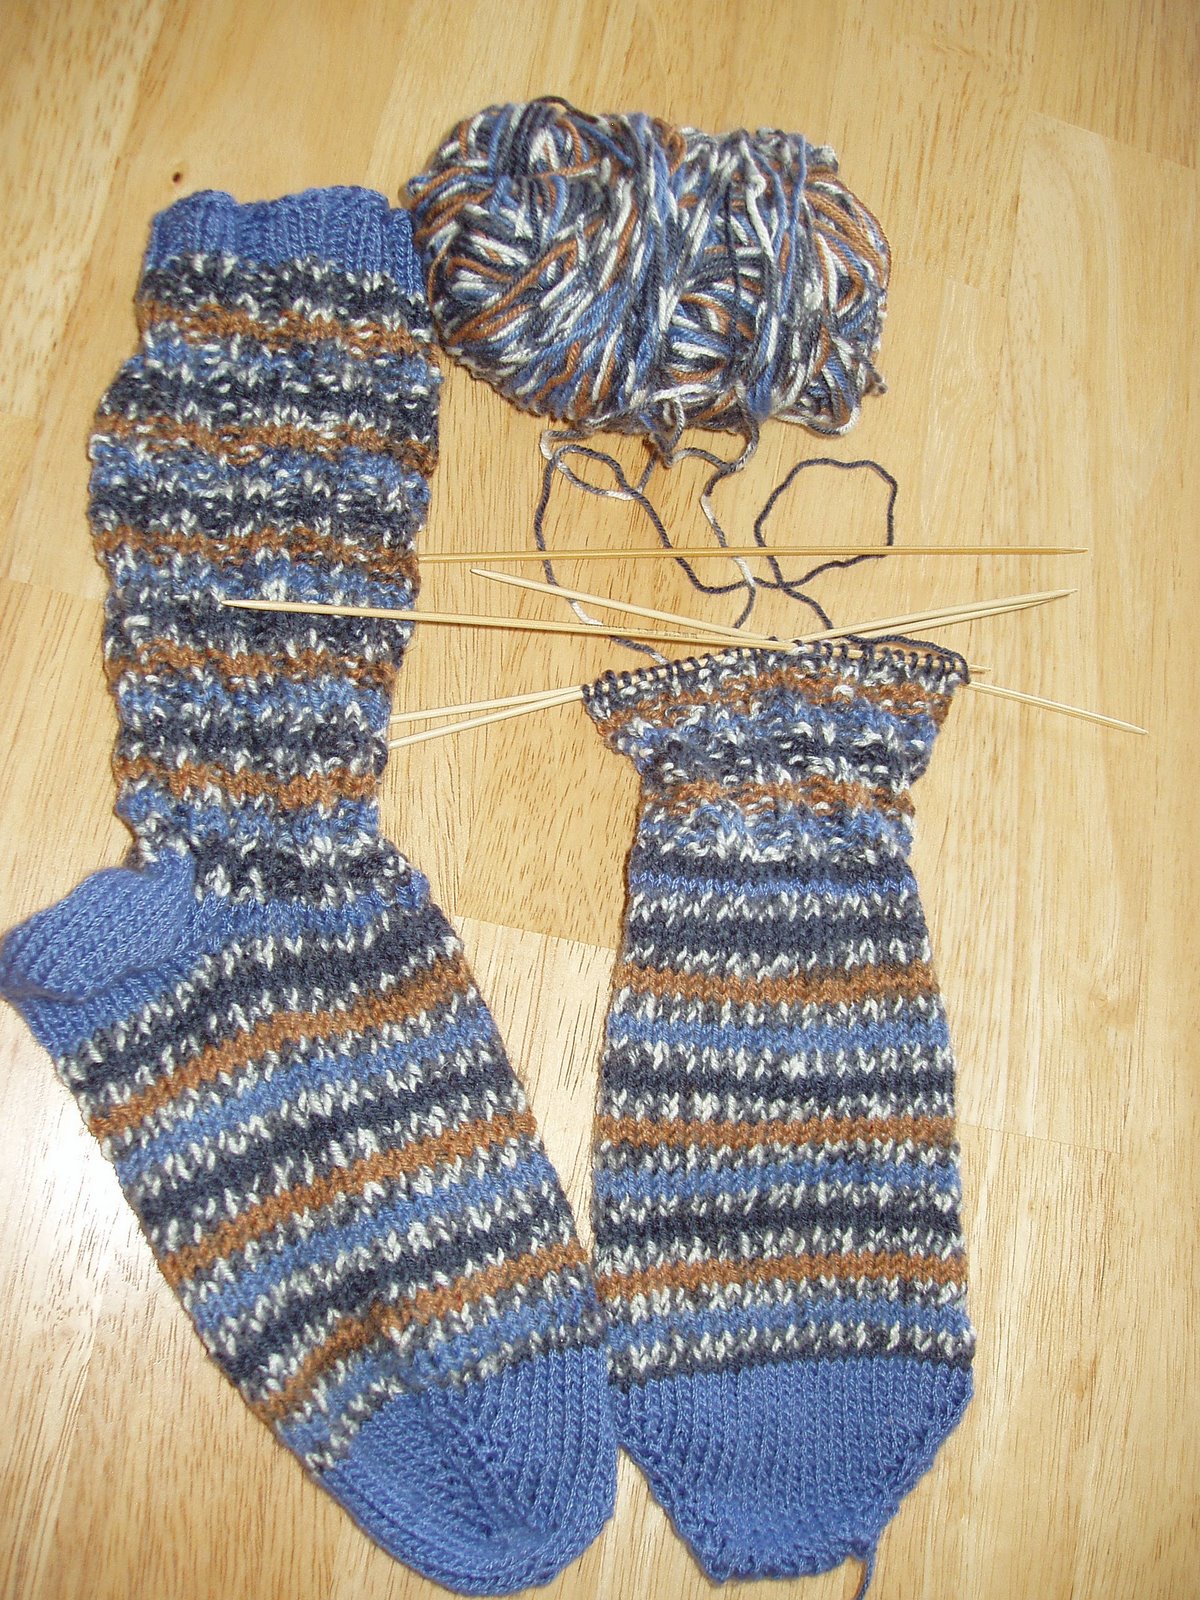 Socks nearly done